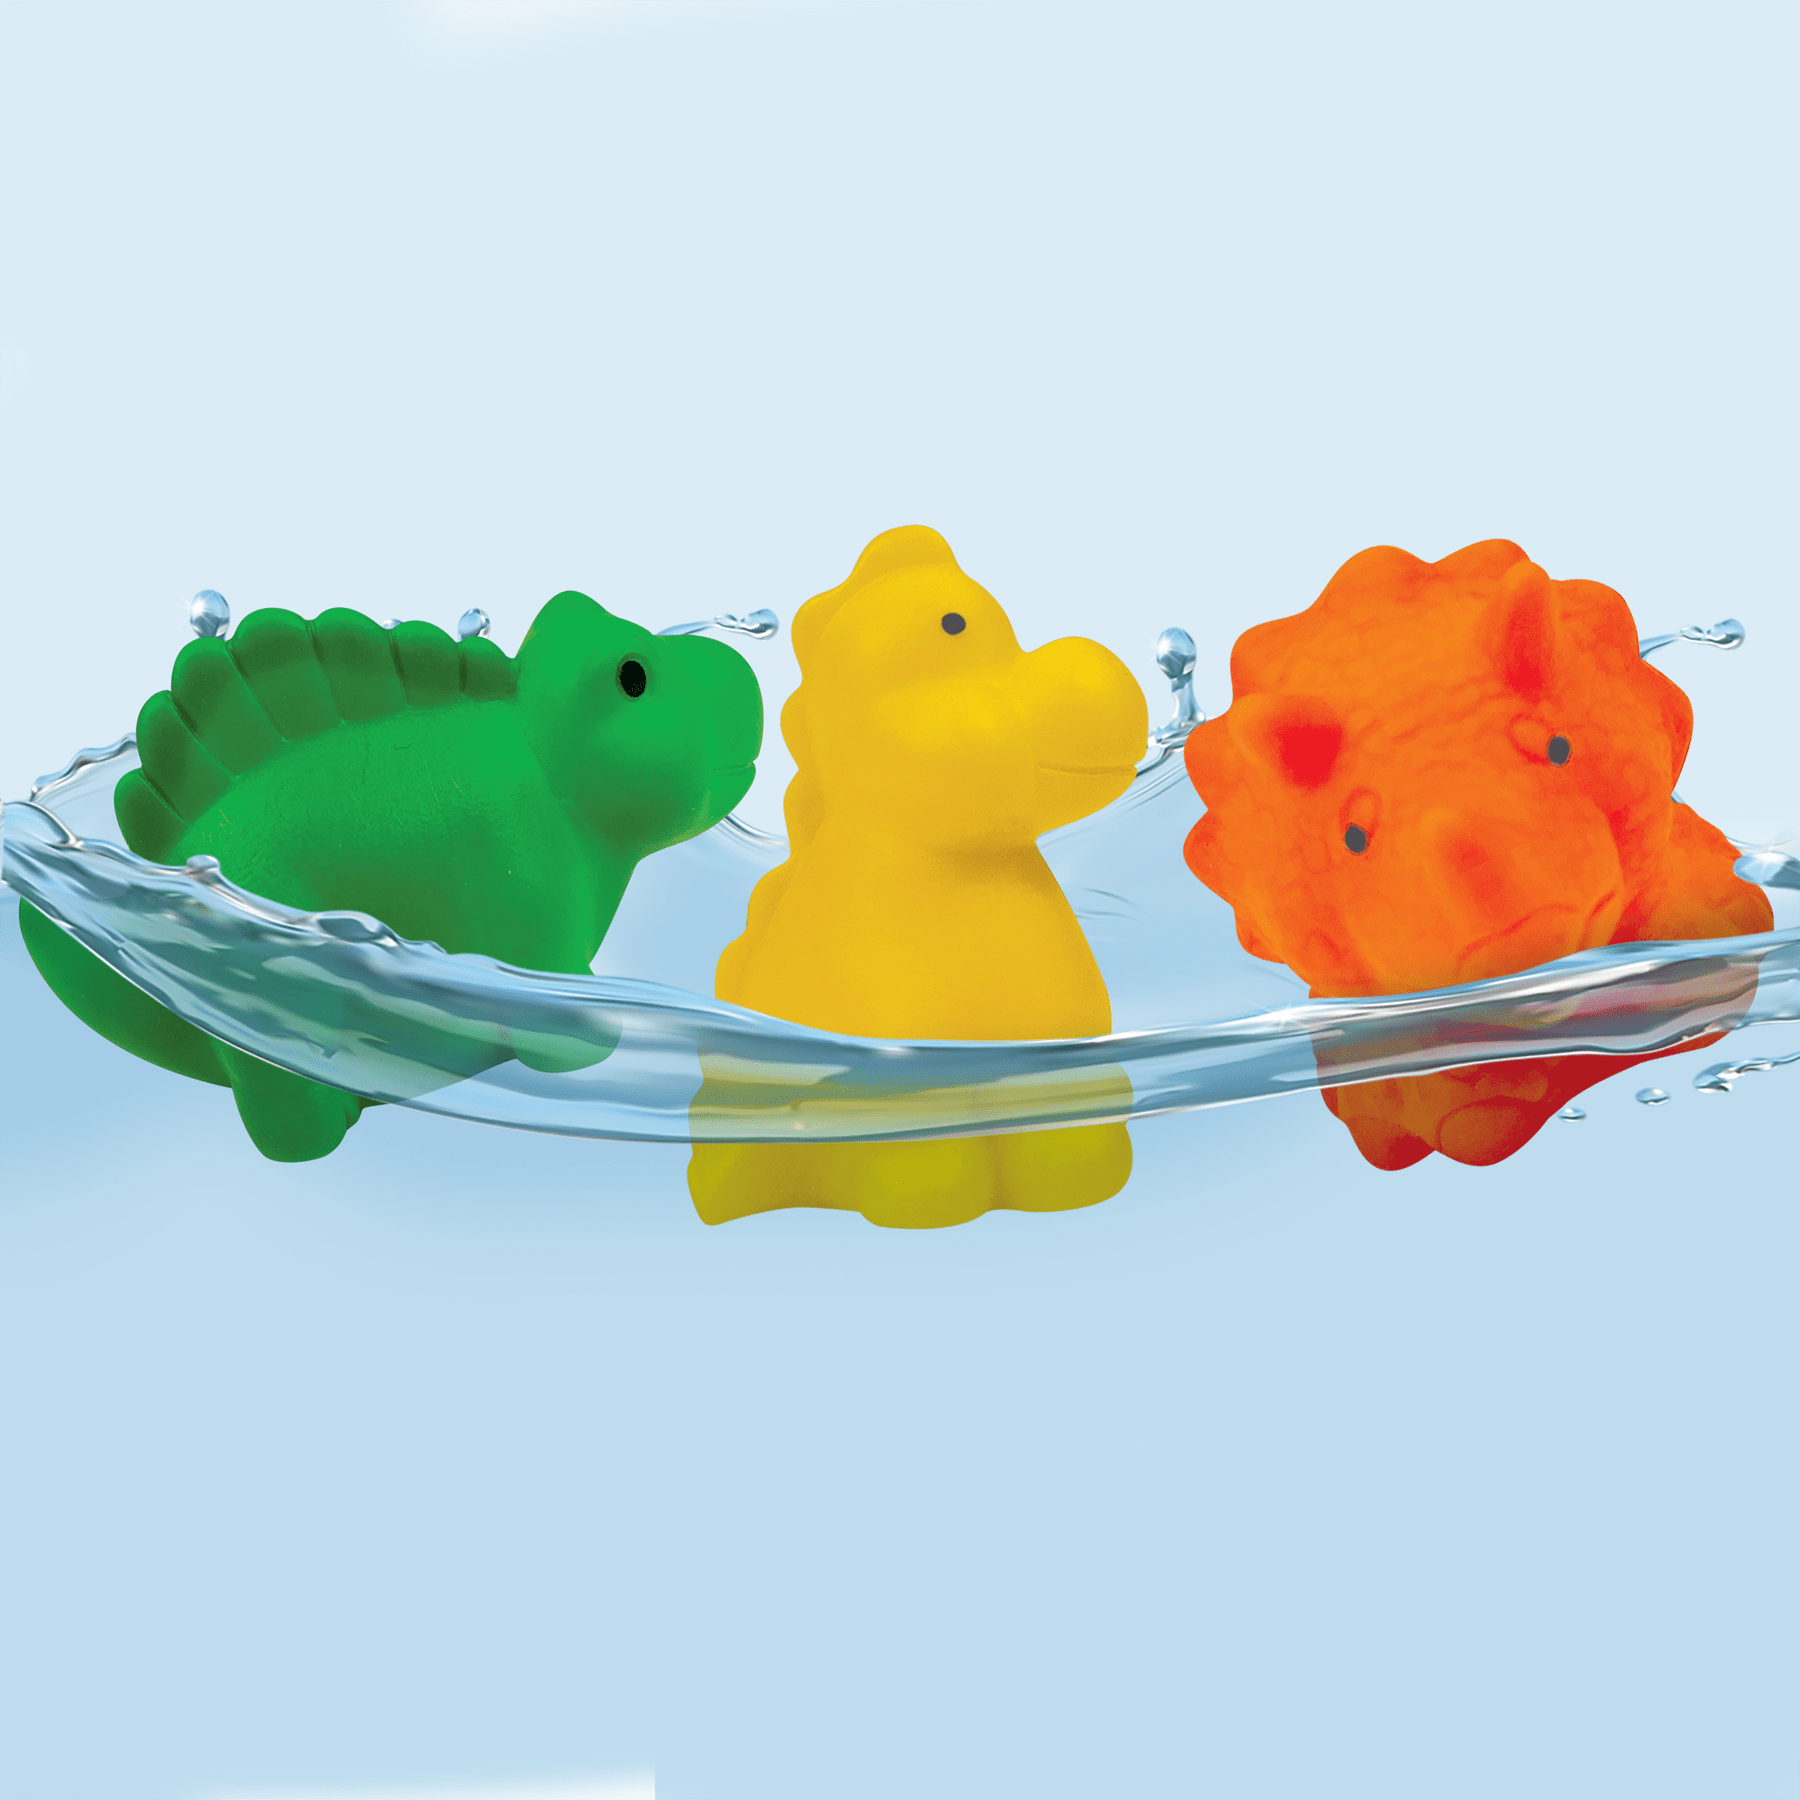 Little Hippo Books Splish! Splash! Bath! - Dino Friends - Little Miss Muffin Children & Home